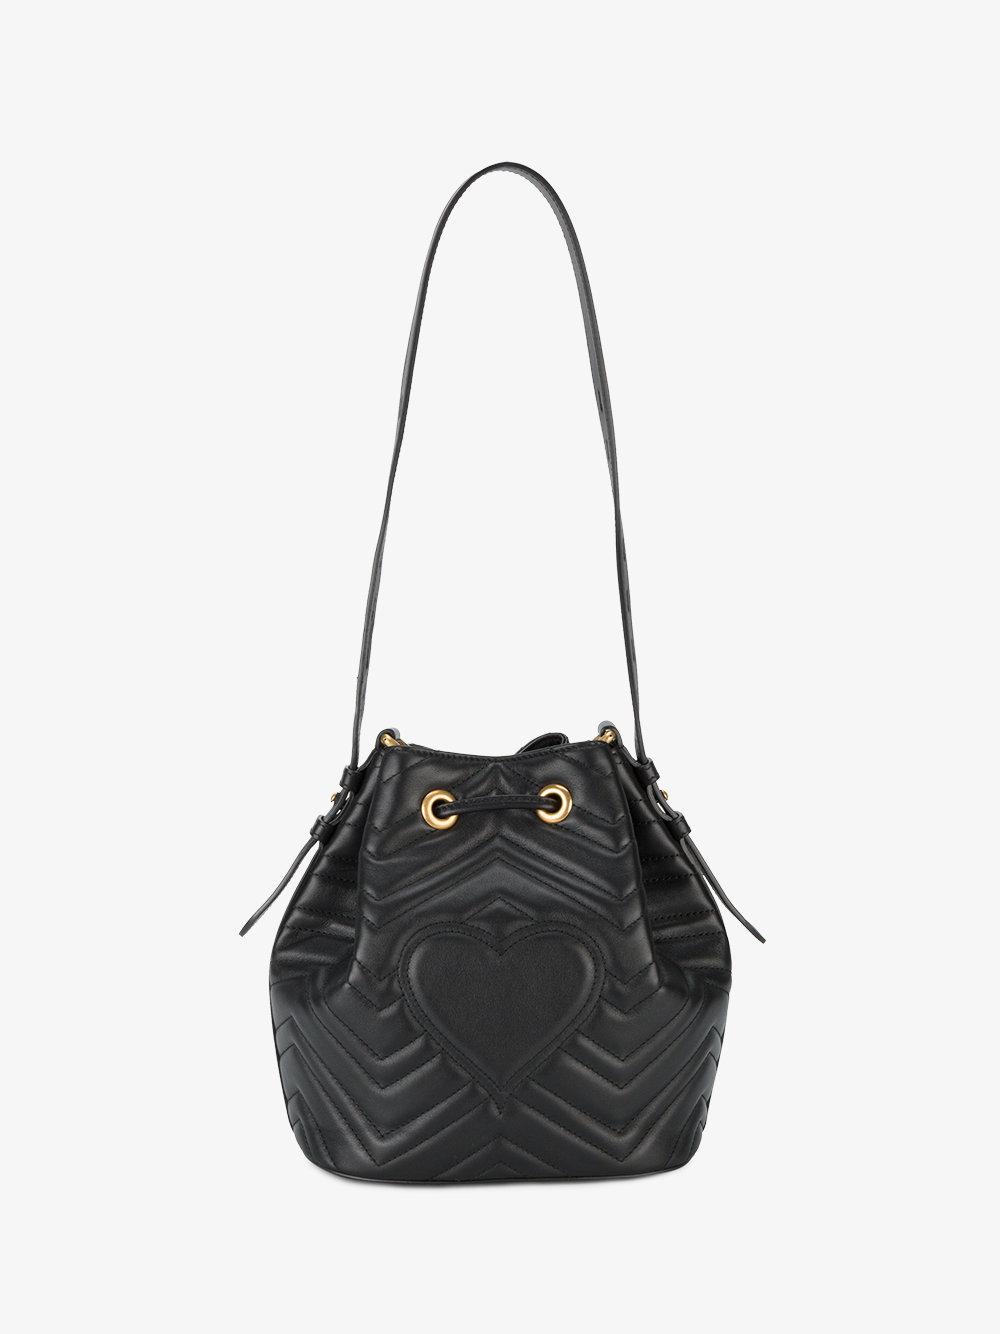 Gucci Canvas Marmont Mini Bucket Bag in Black - Lyst